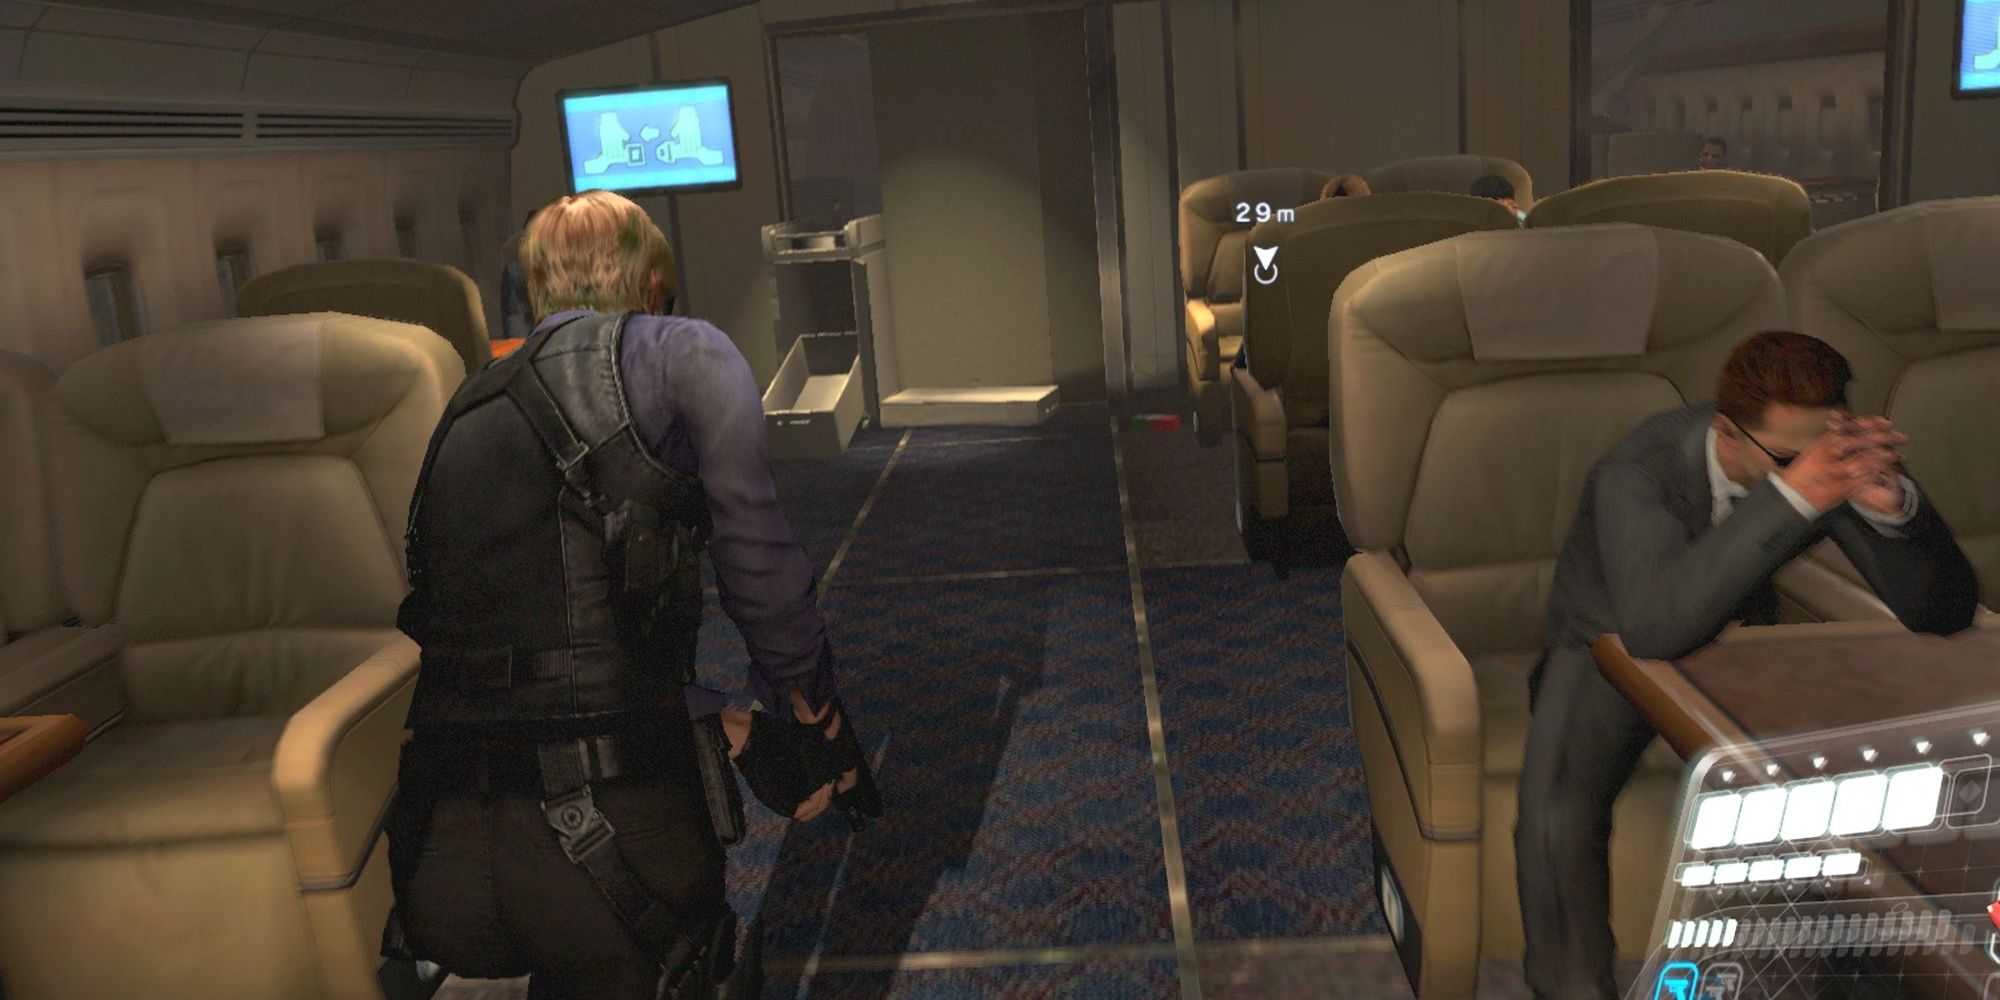 Leon heading toward the cargo bay on the plane in Resident Evil 6.